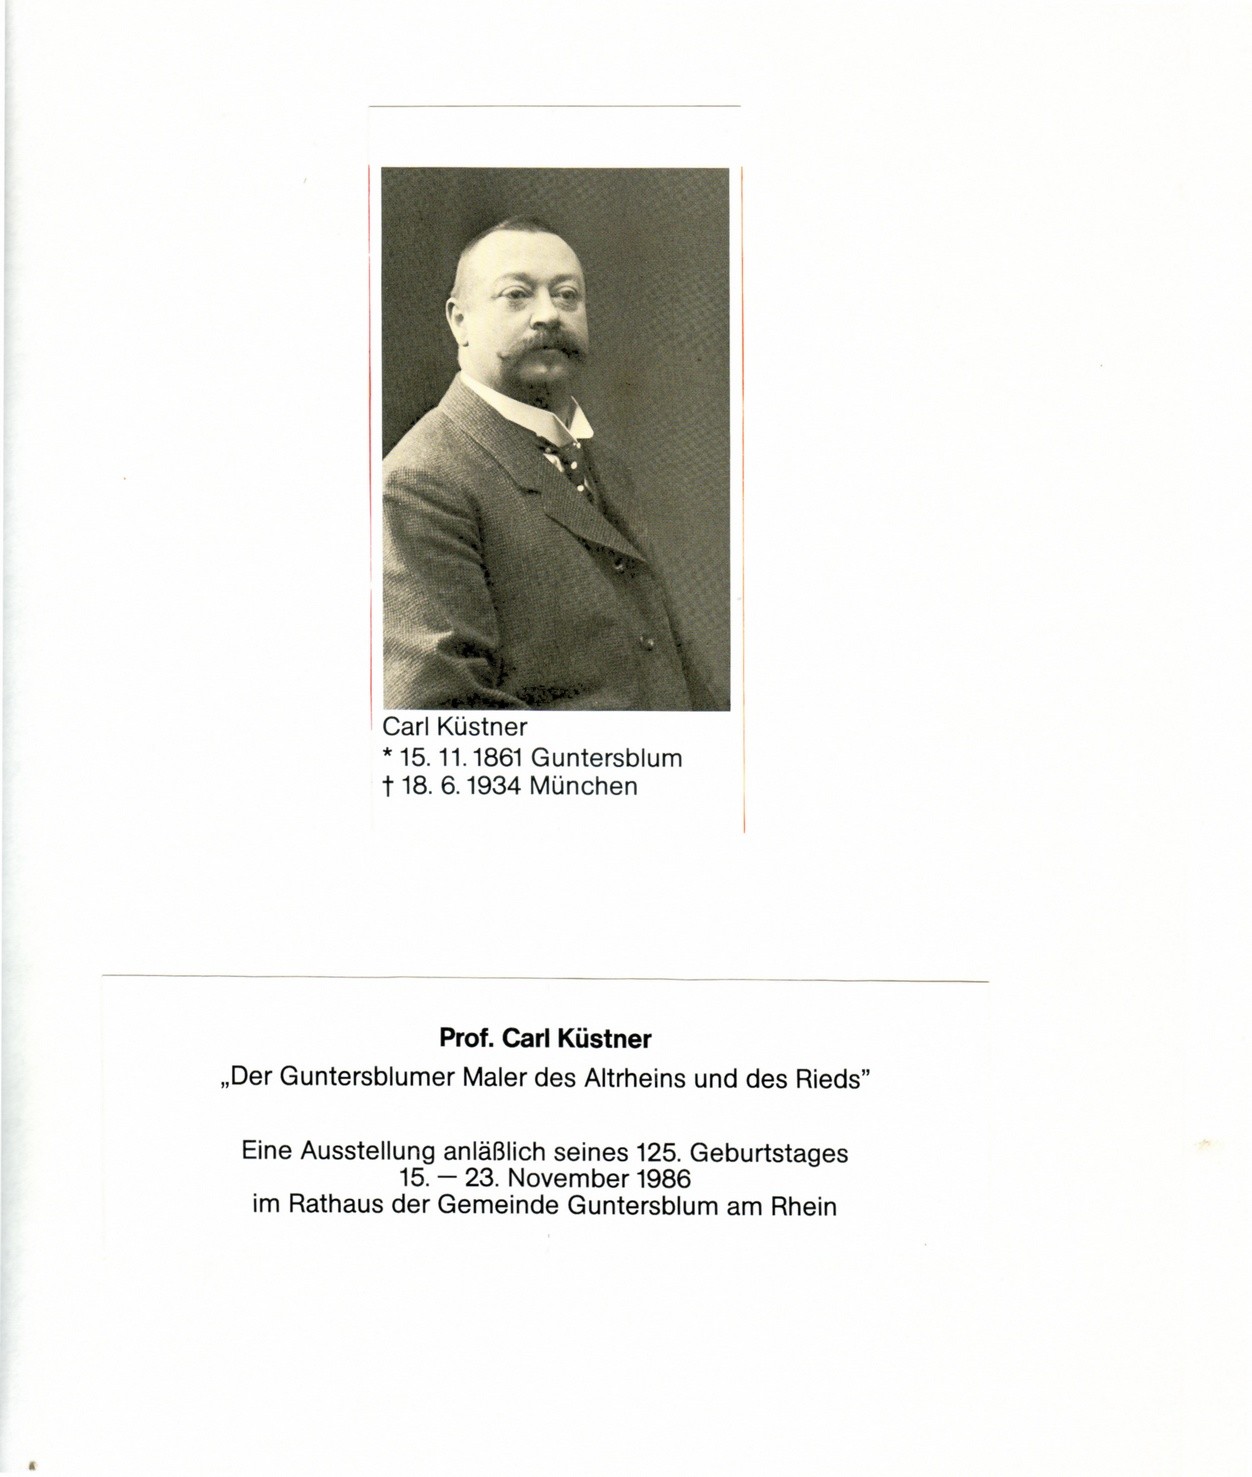 Gästebuch zur Ausstellung Prof. Carl Küstner (Kulturverein Guntersblum CC BY-NC-SA)